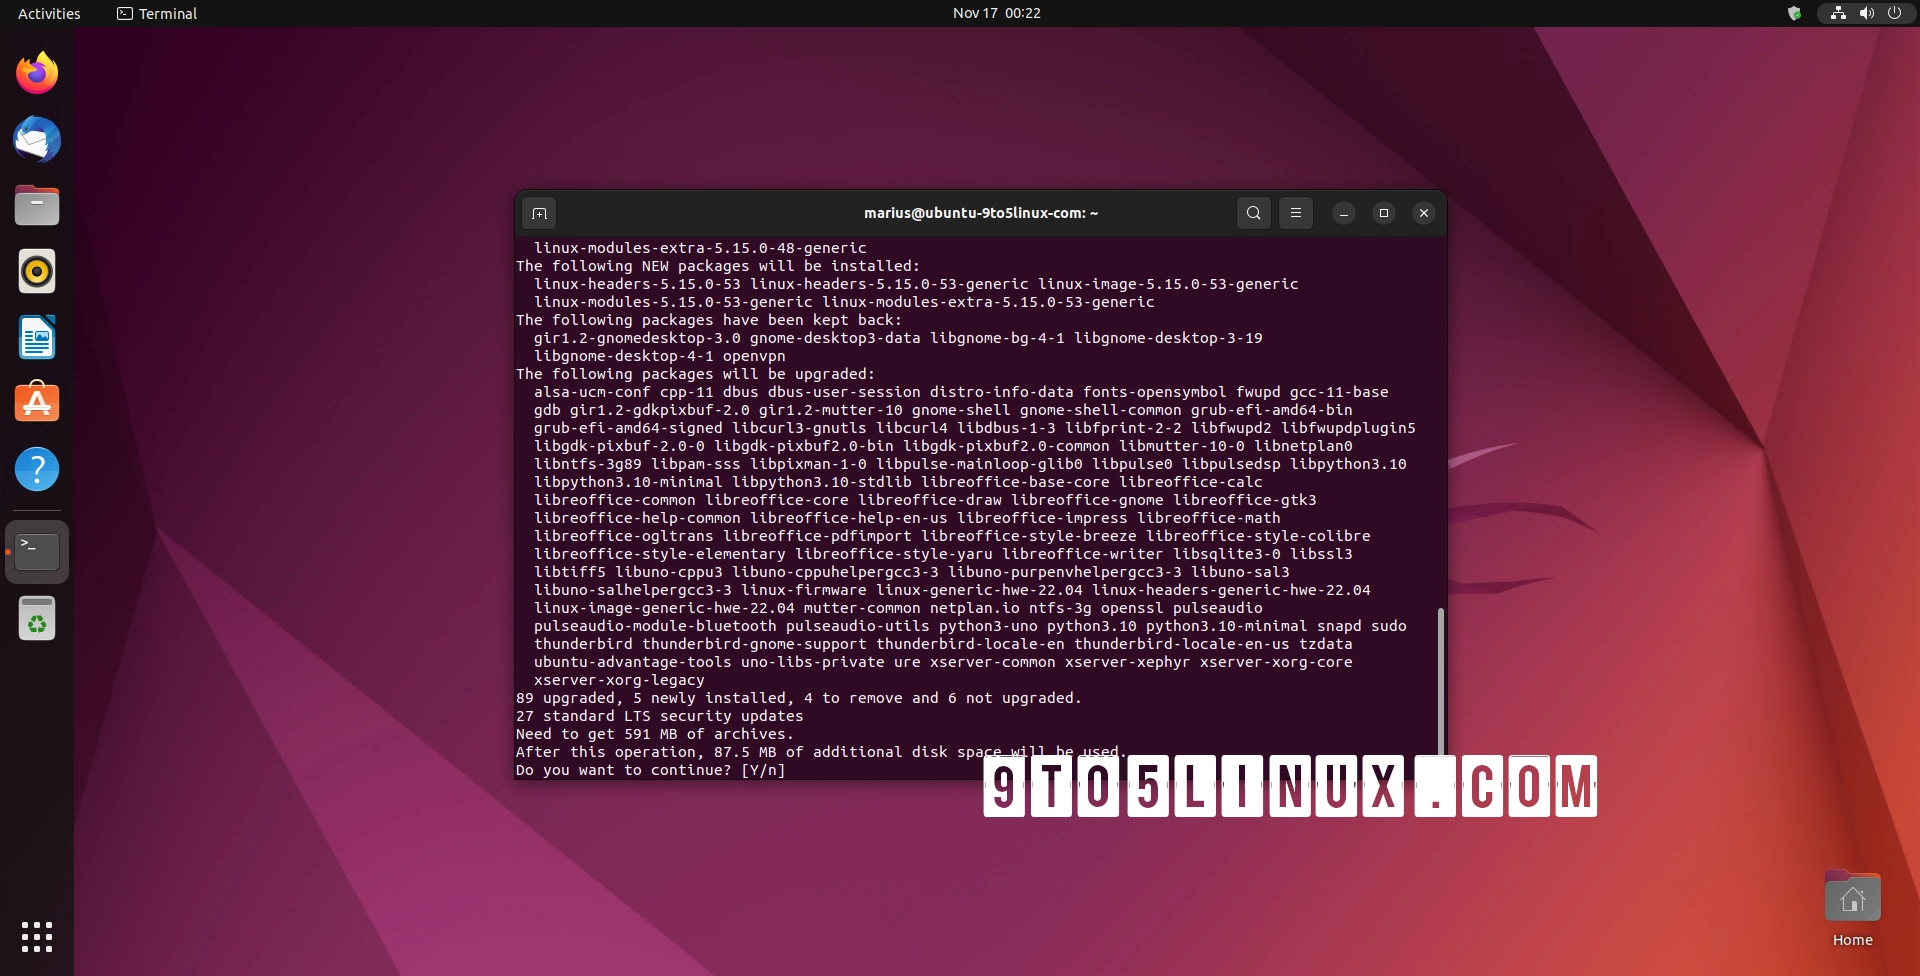 Ubuntu 6324-1: Linux kernel (GKE) vulnerabilities